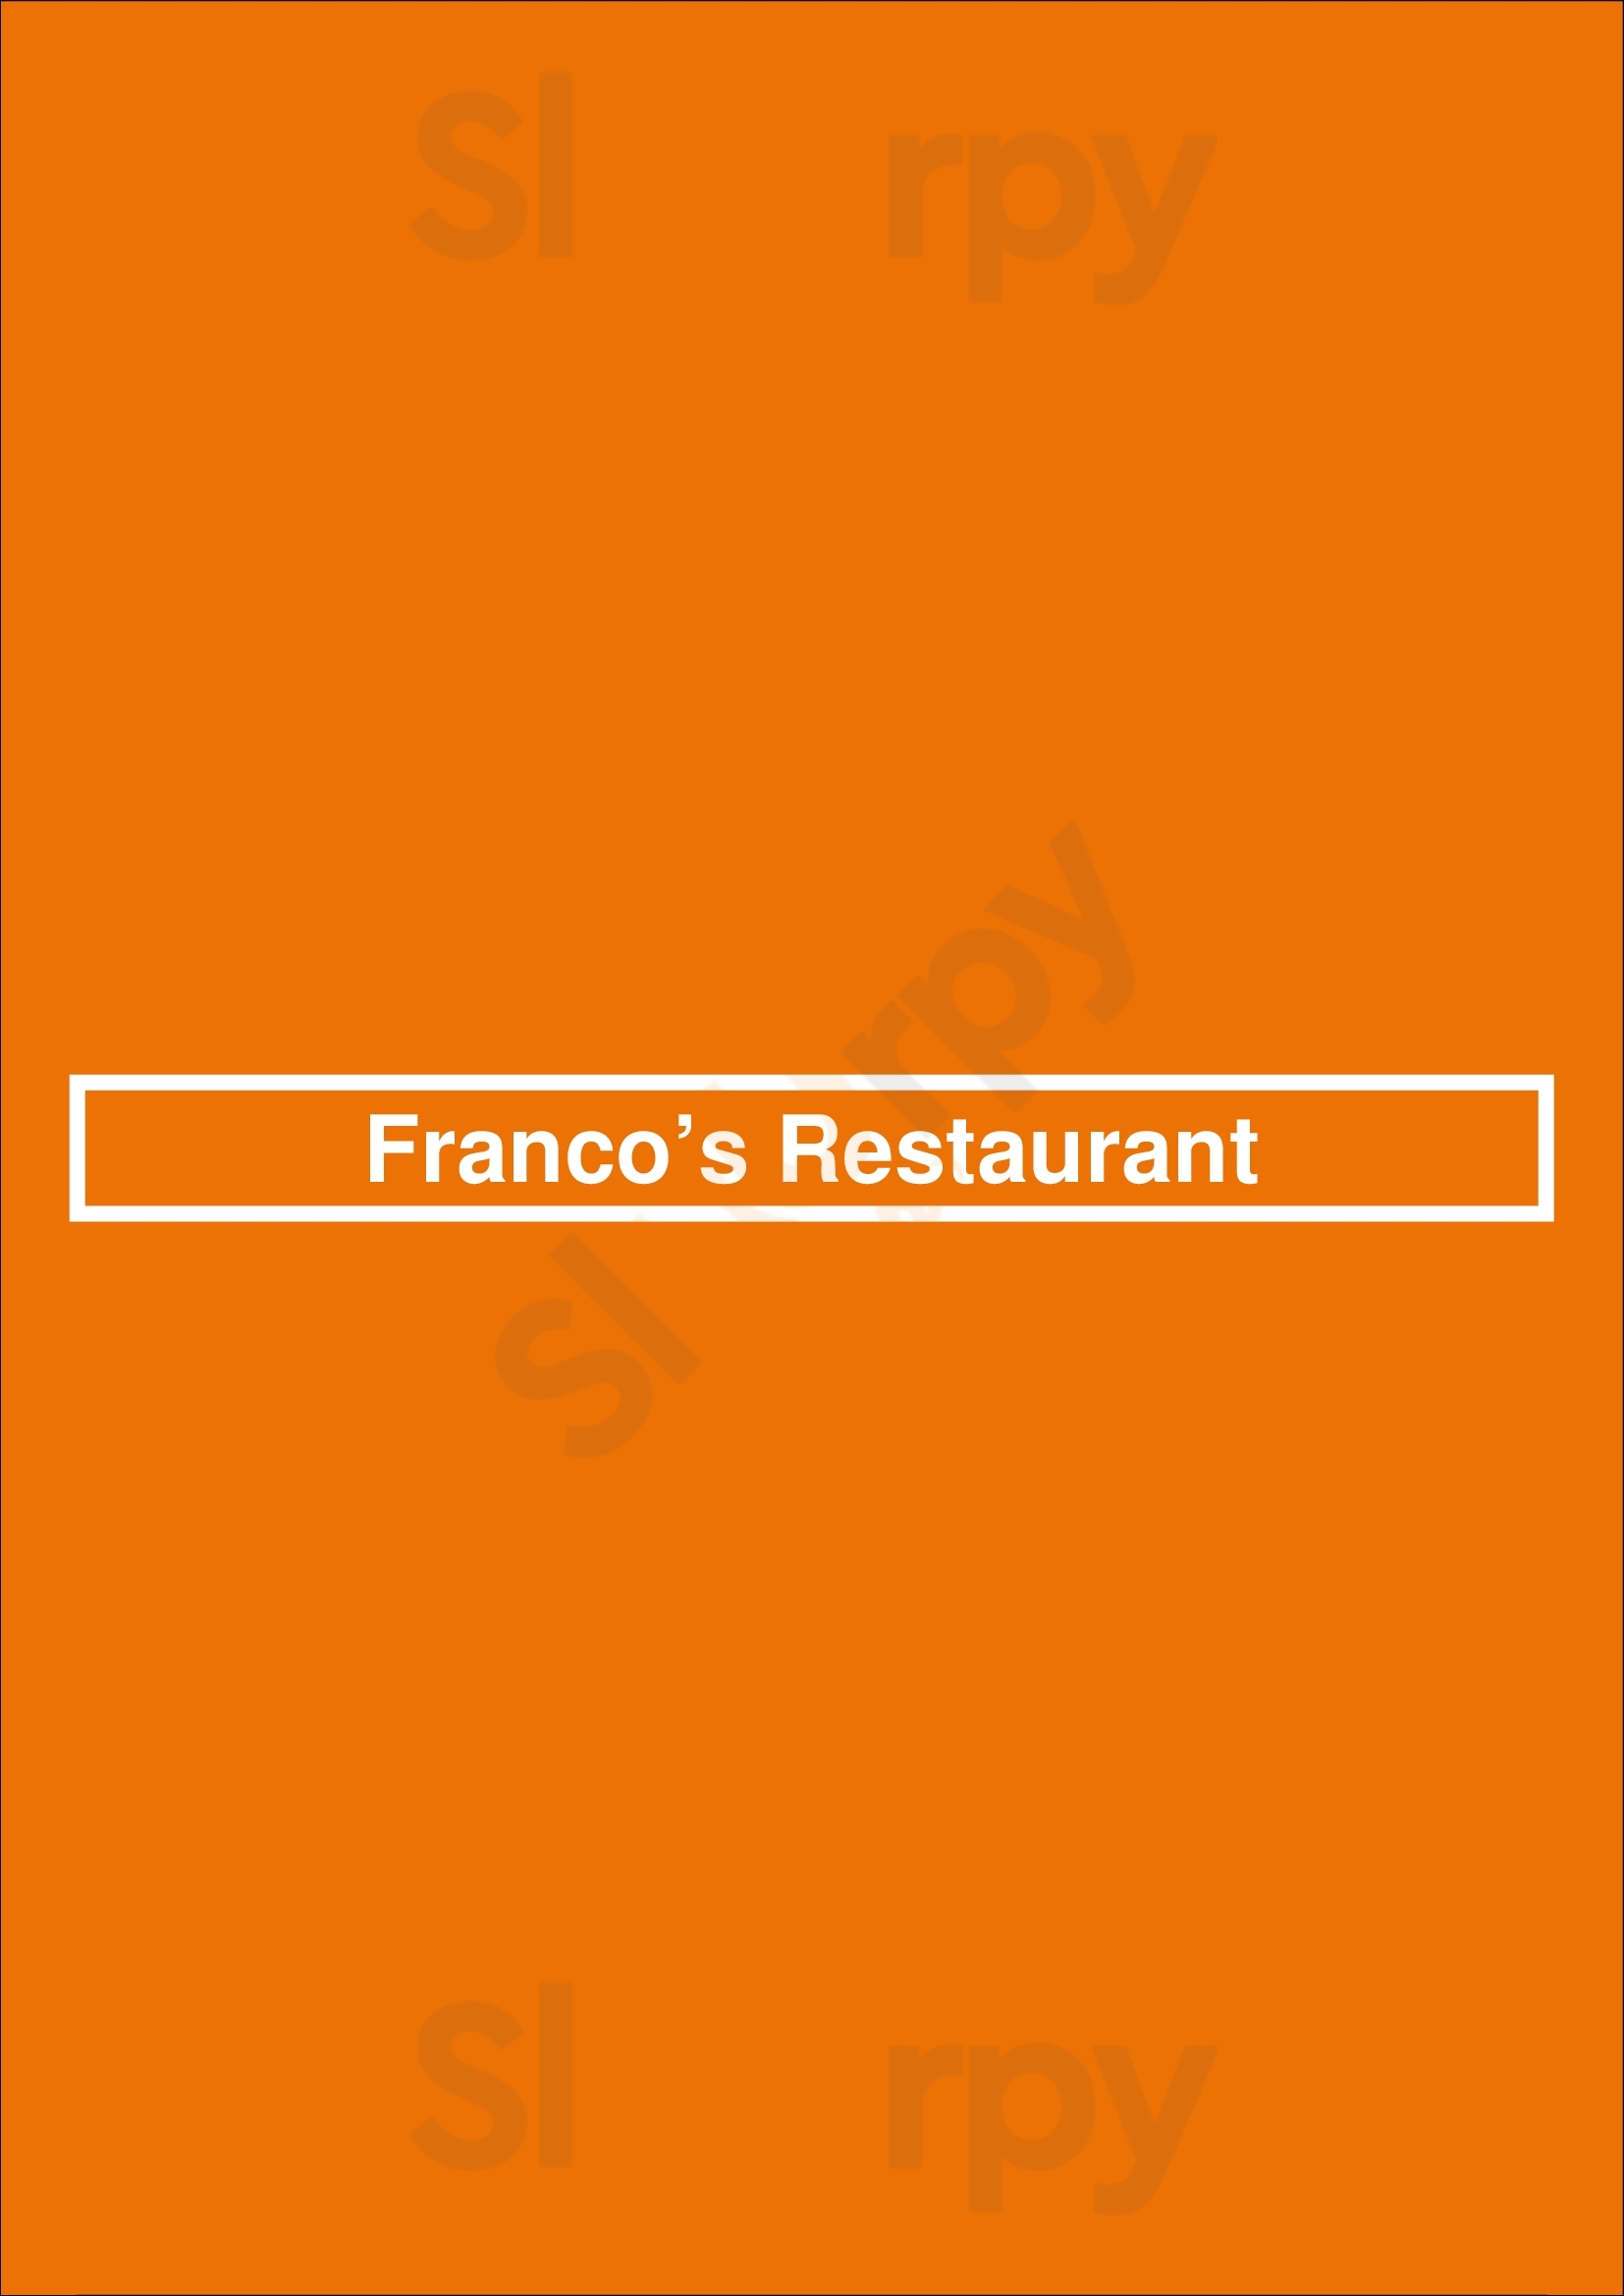 Franco’s Restaurant Richmond Menu - 1